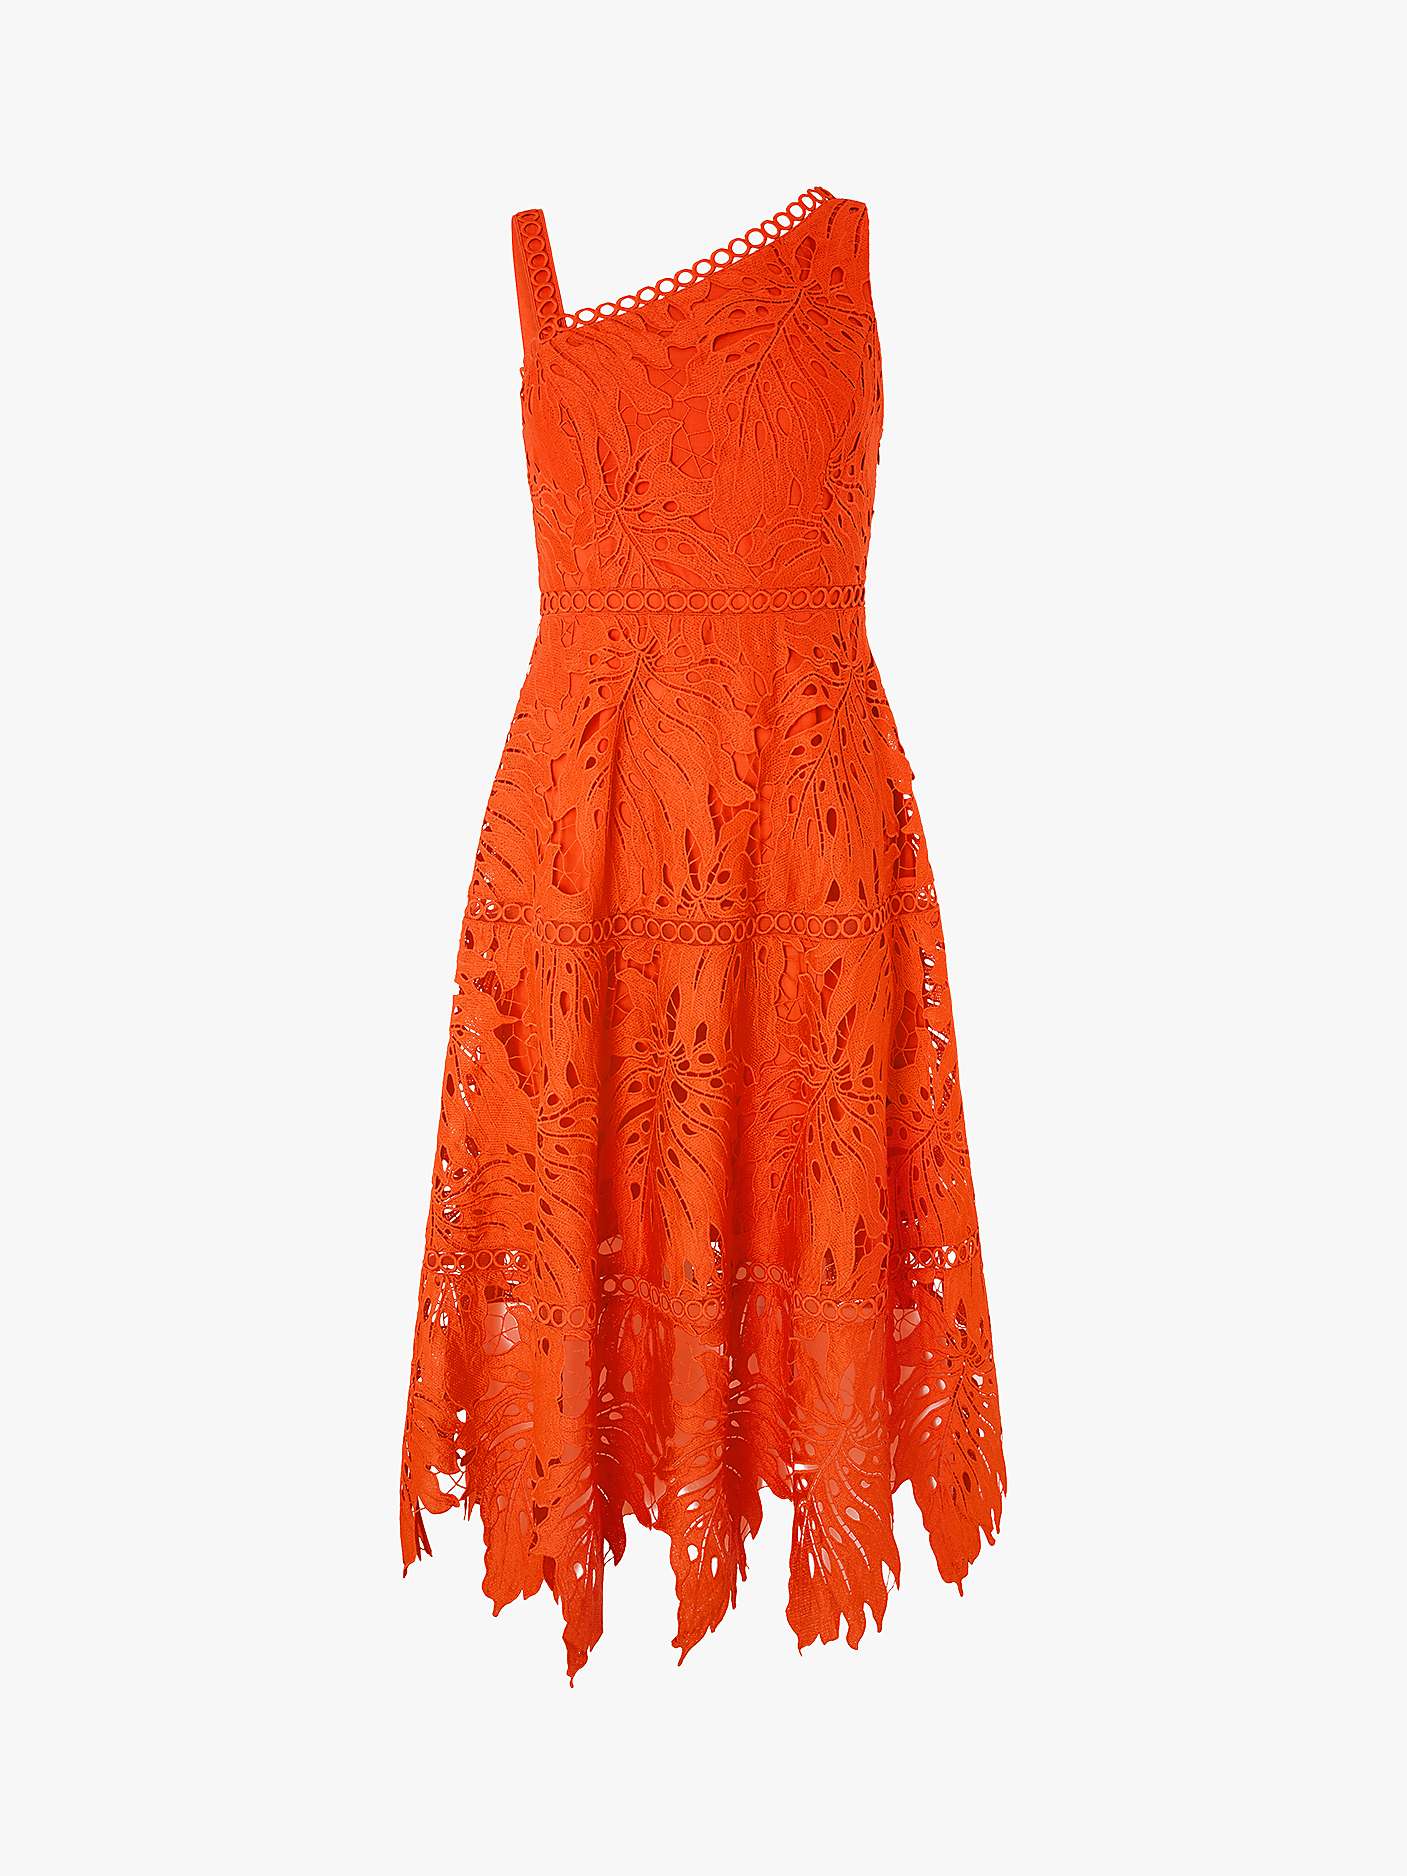 Monsoon Maria Palm Lace Dress, Orange at John Lewis & Partners